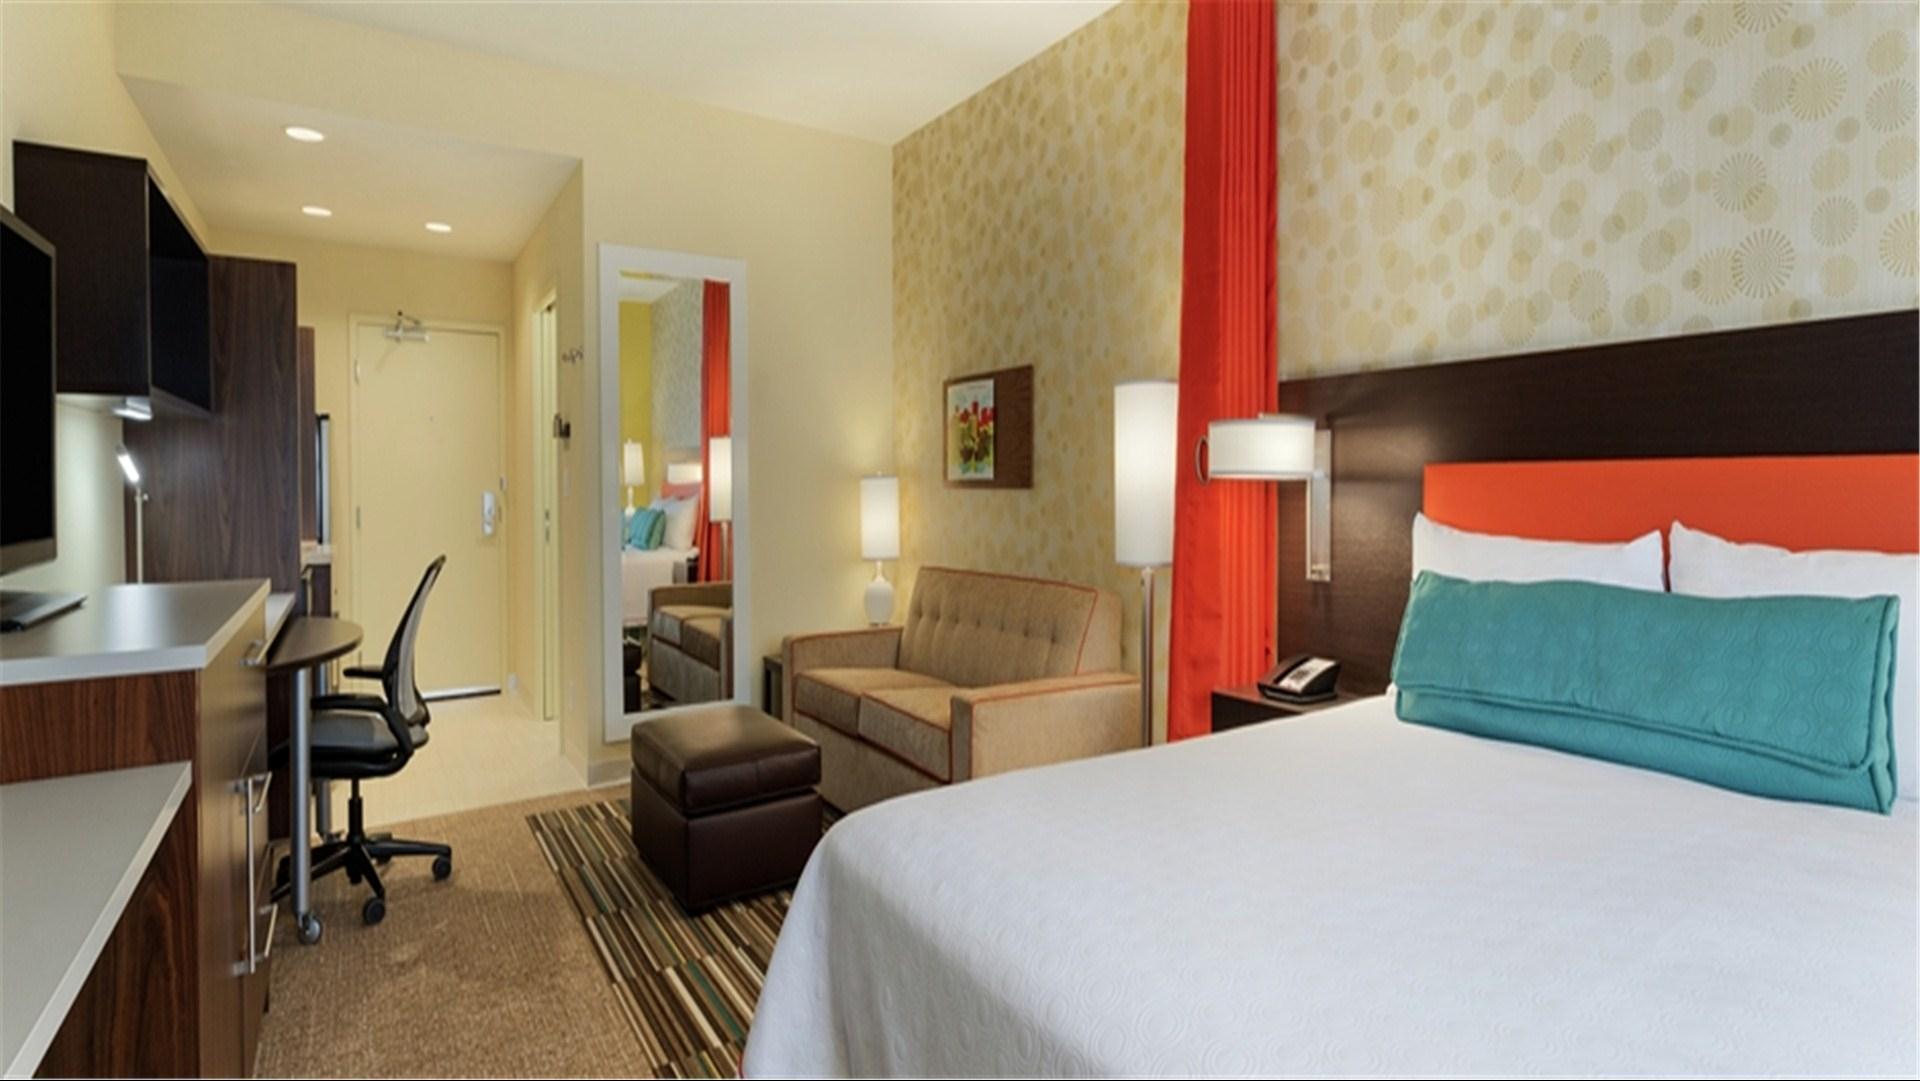 Home2 Suites by Hilton Smithfield Providence in Smithfield, RI